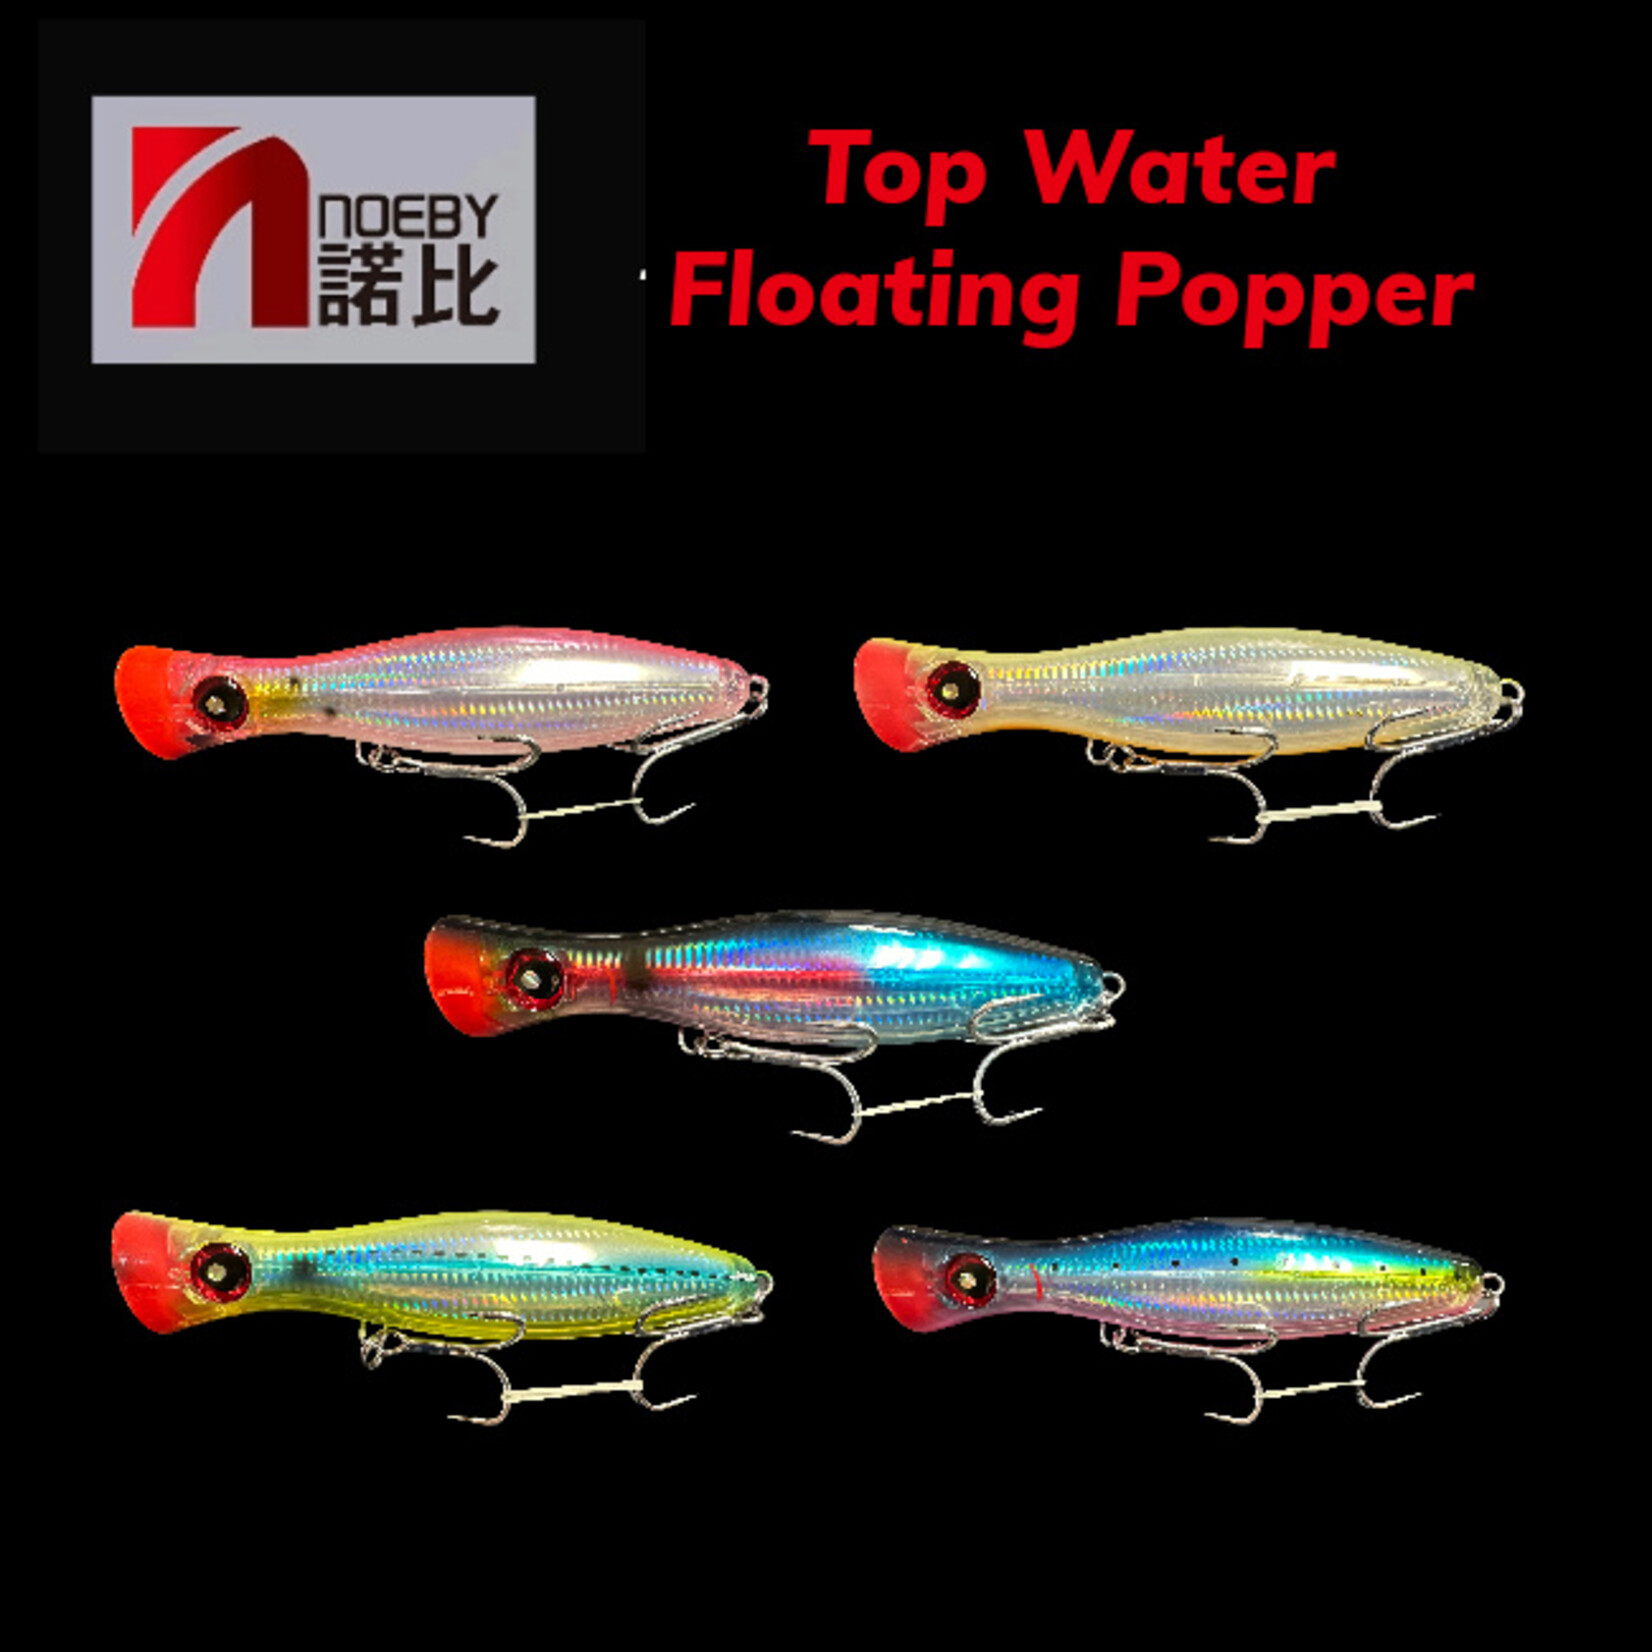 Noeby Top Water Floating Popper